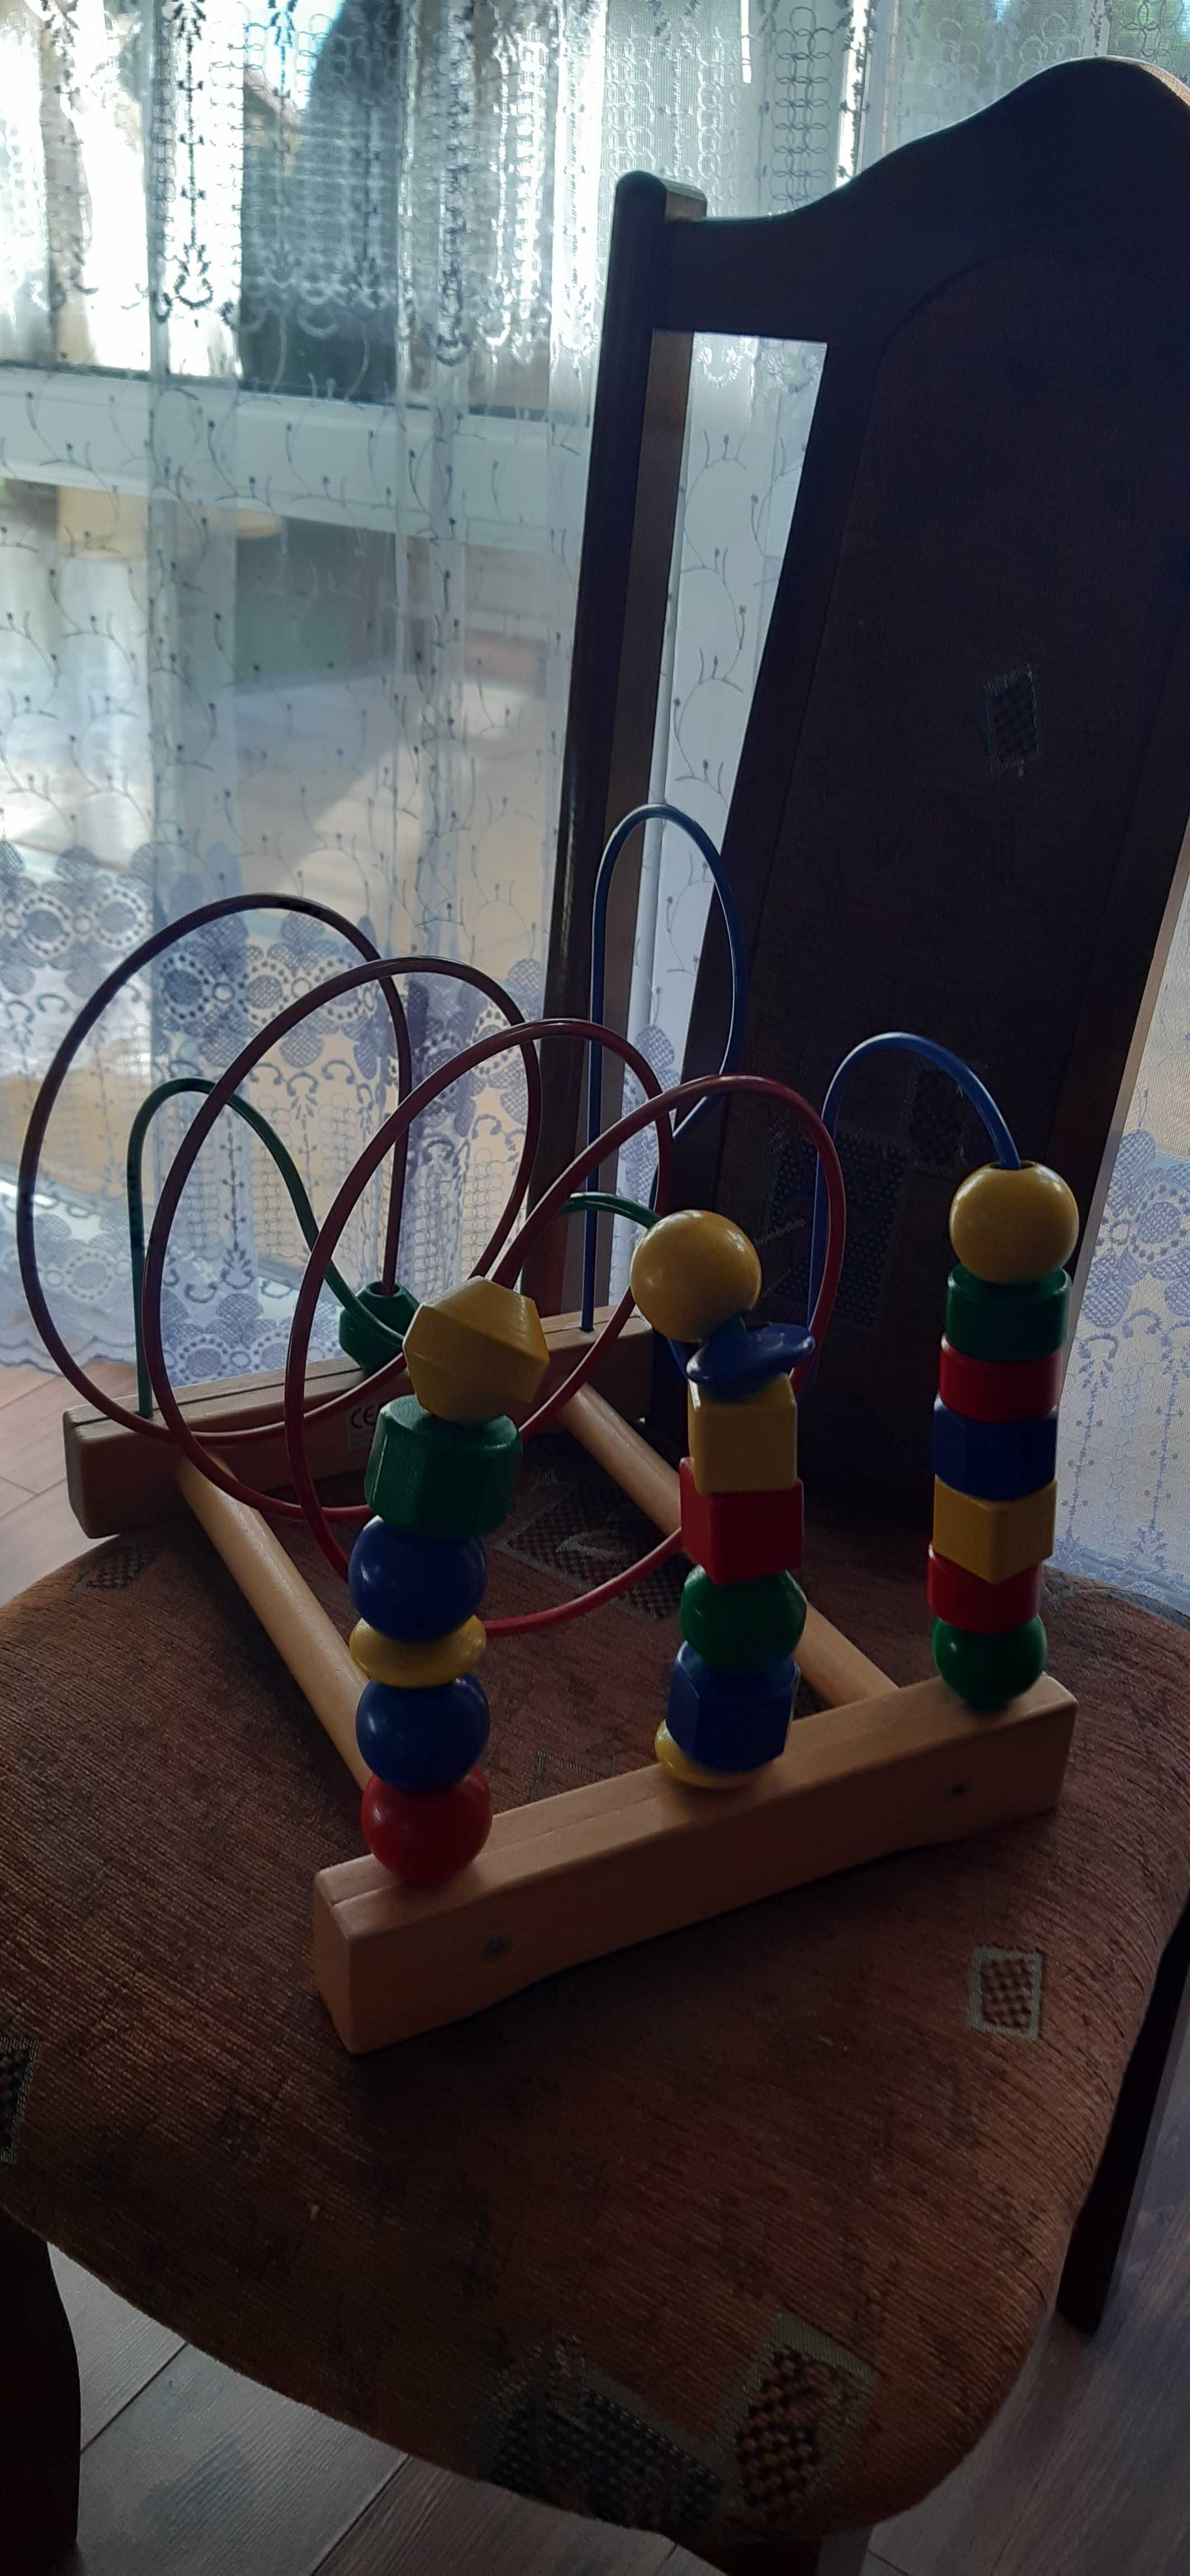 Mula Ikea zabawka dla dziecka